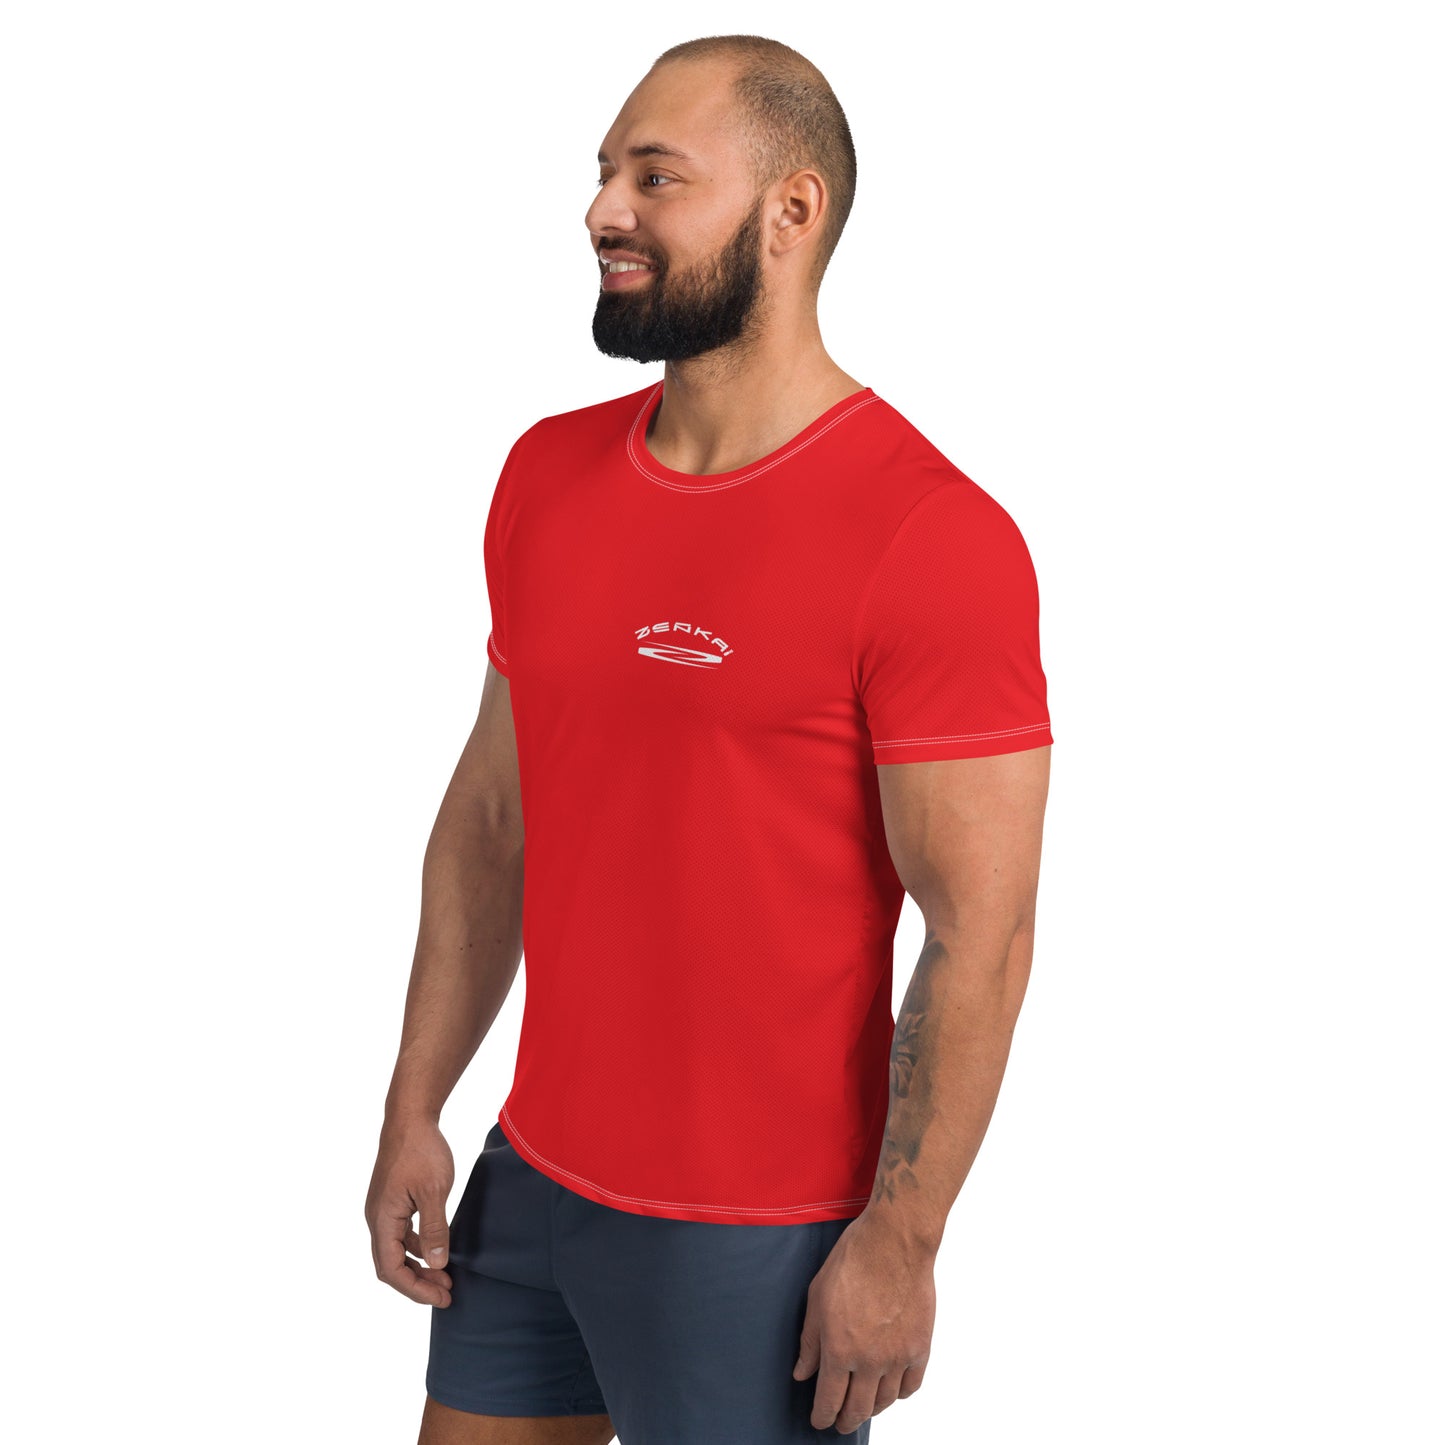 ZENKAI Sport-T-Shirt Rot